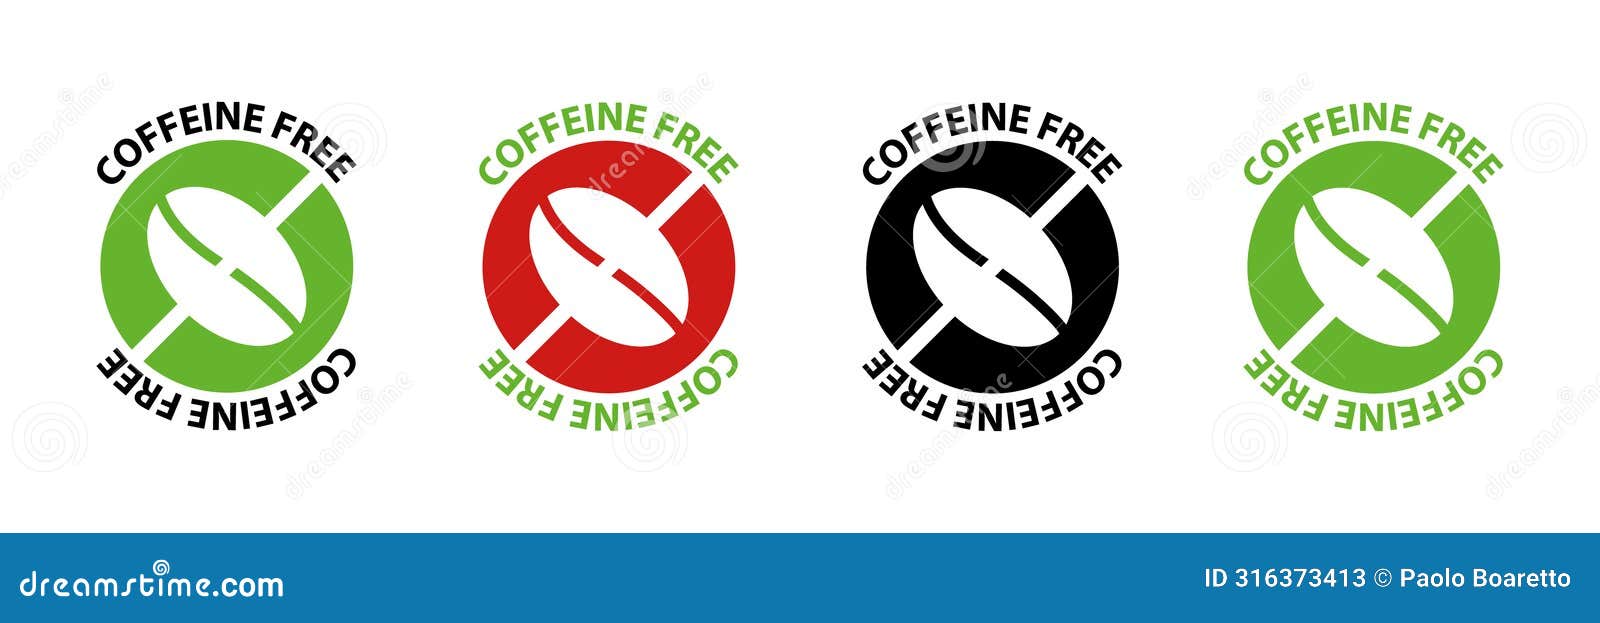 caffeine free  logo icon sign. allergy decaffeinated coffee  health natural eco label